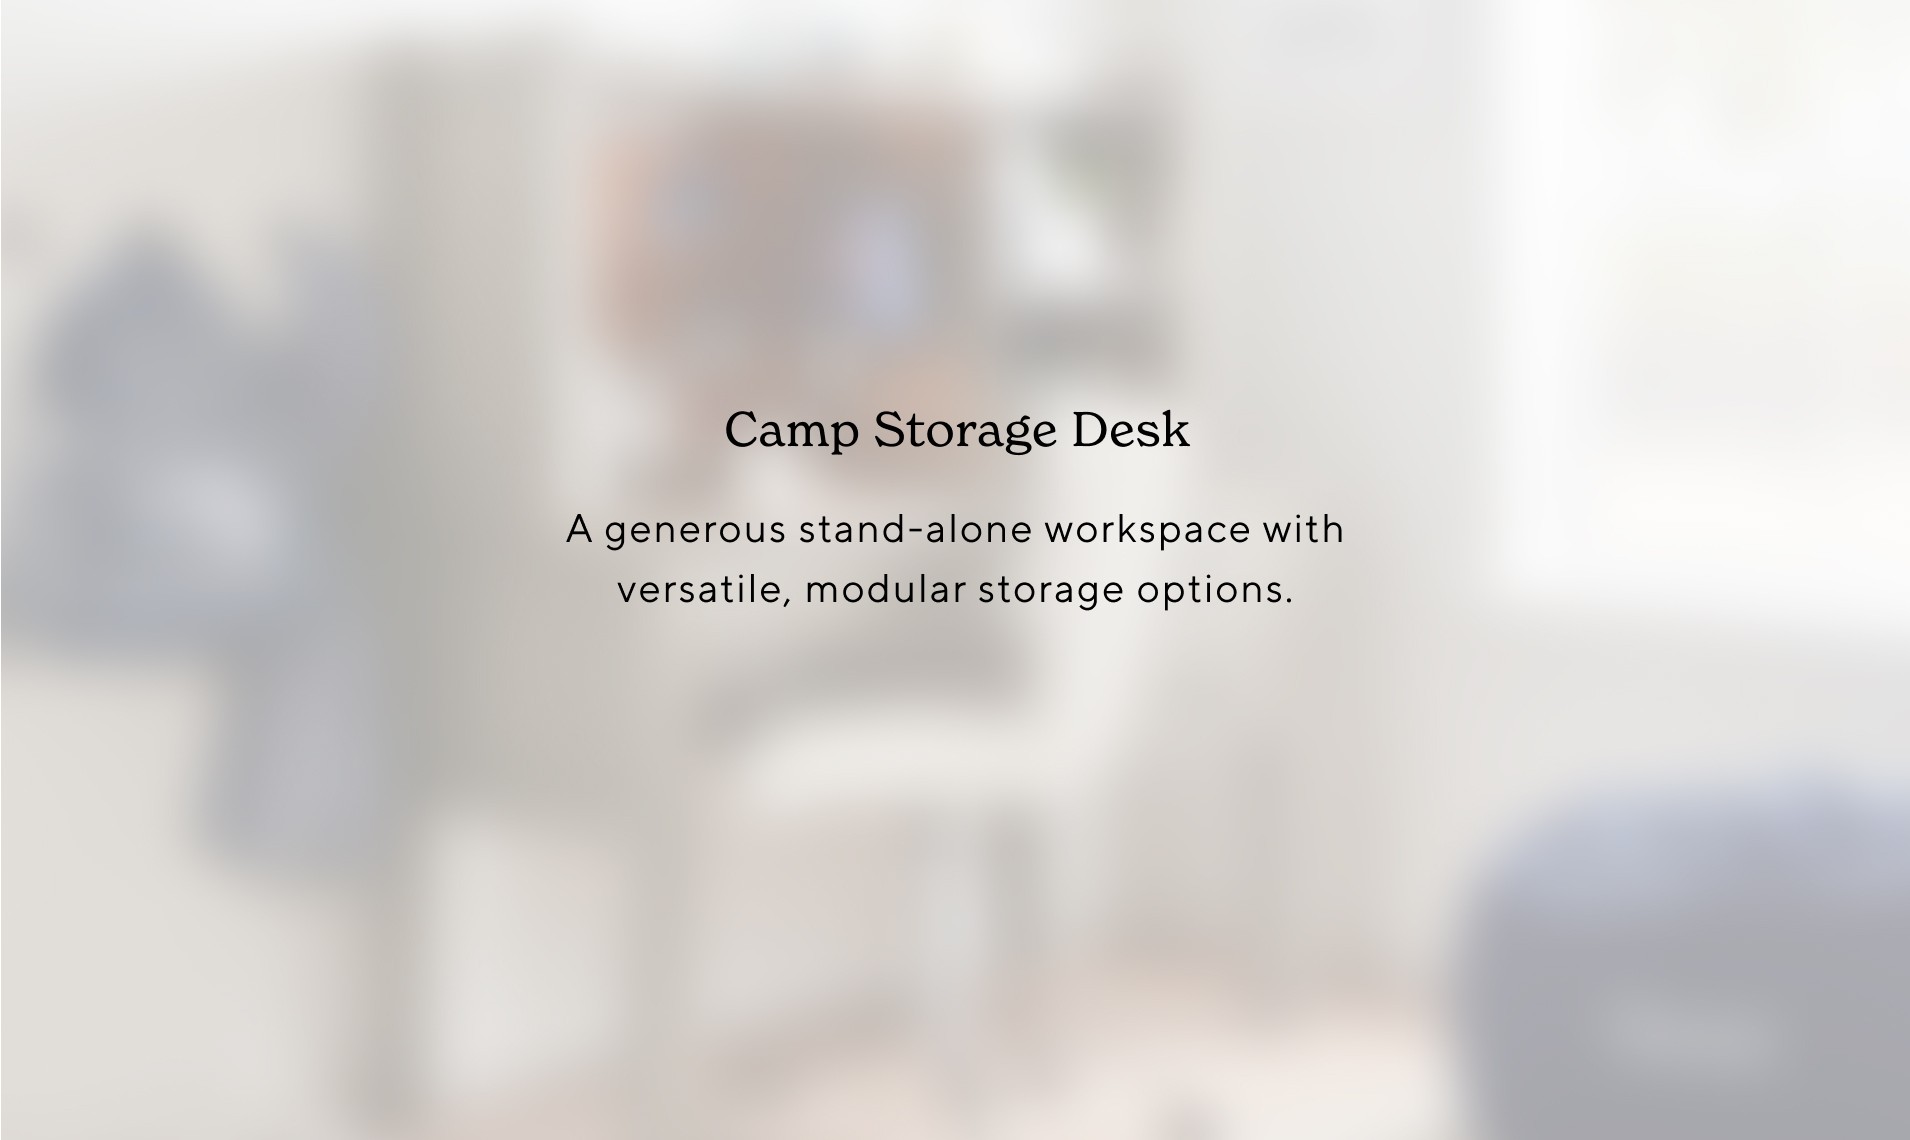 Camp Storage Desk